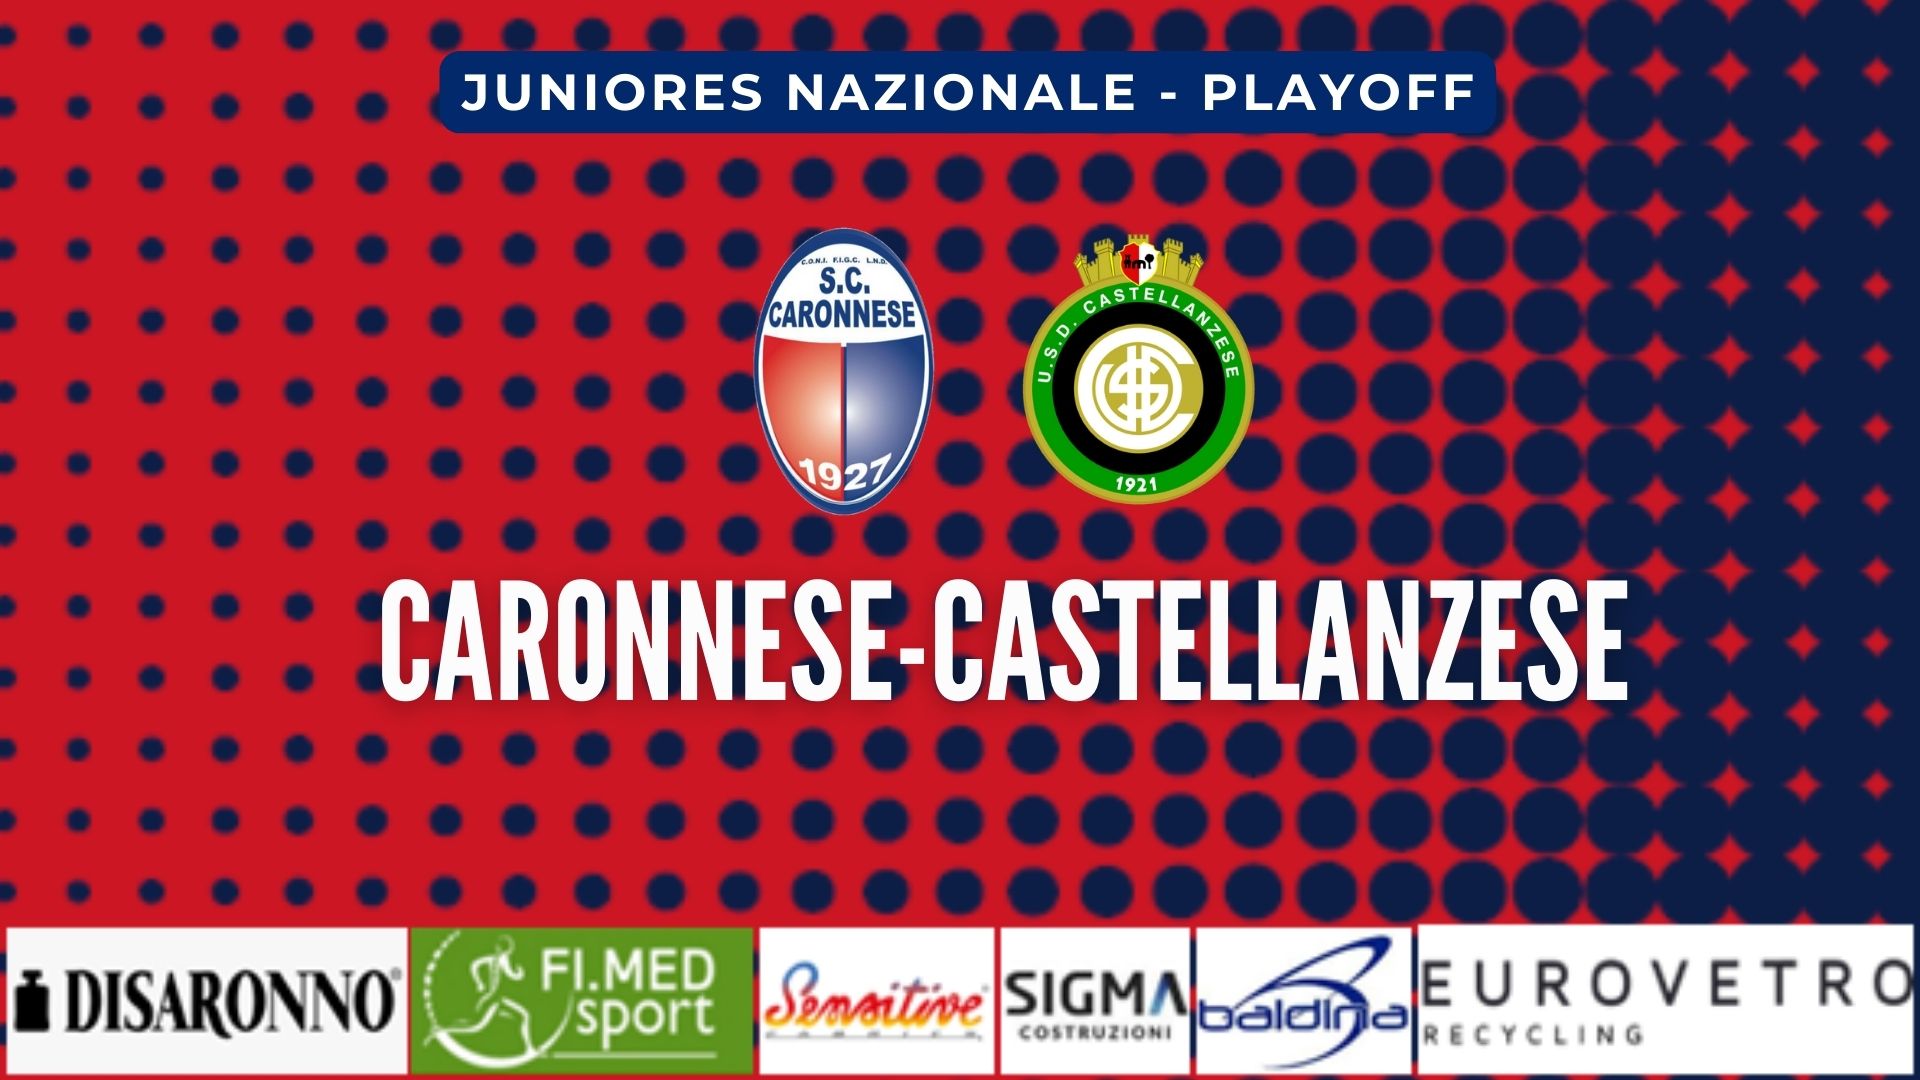 Caronnese-Castellanzese playoff Juniores